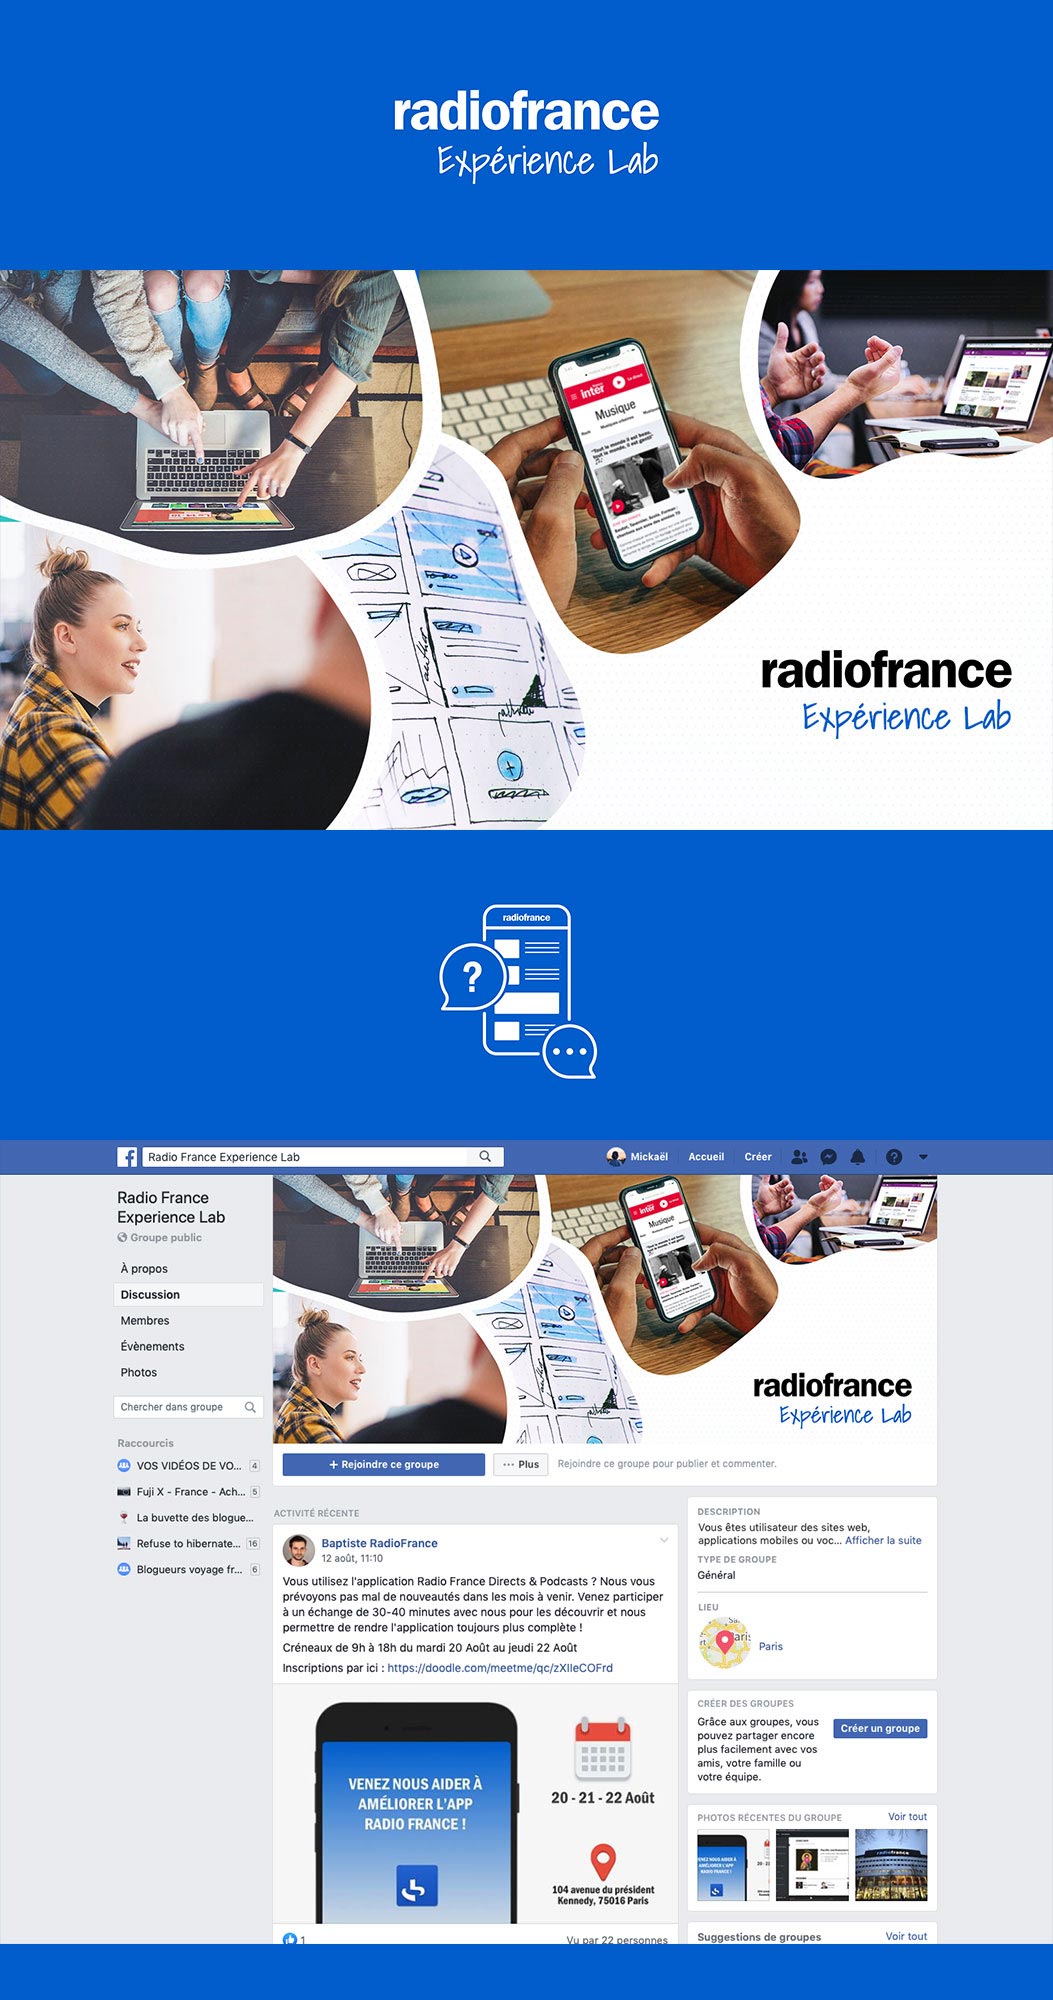 radiofrance-experience-lab-facebook